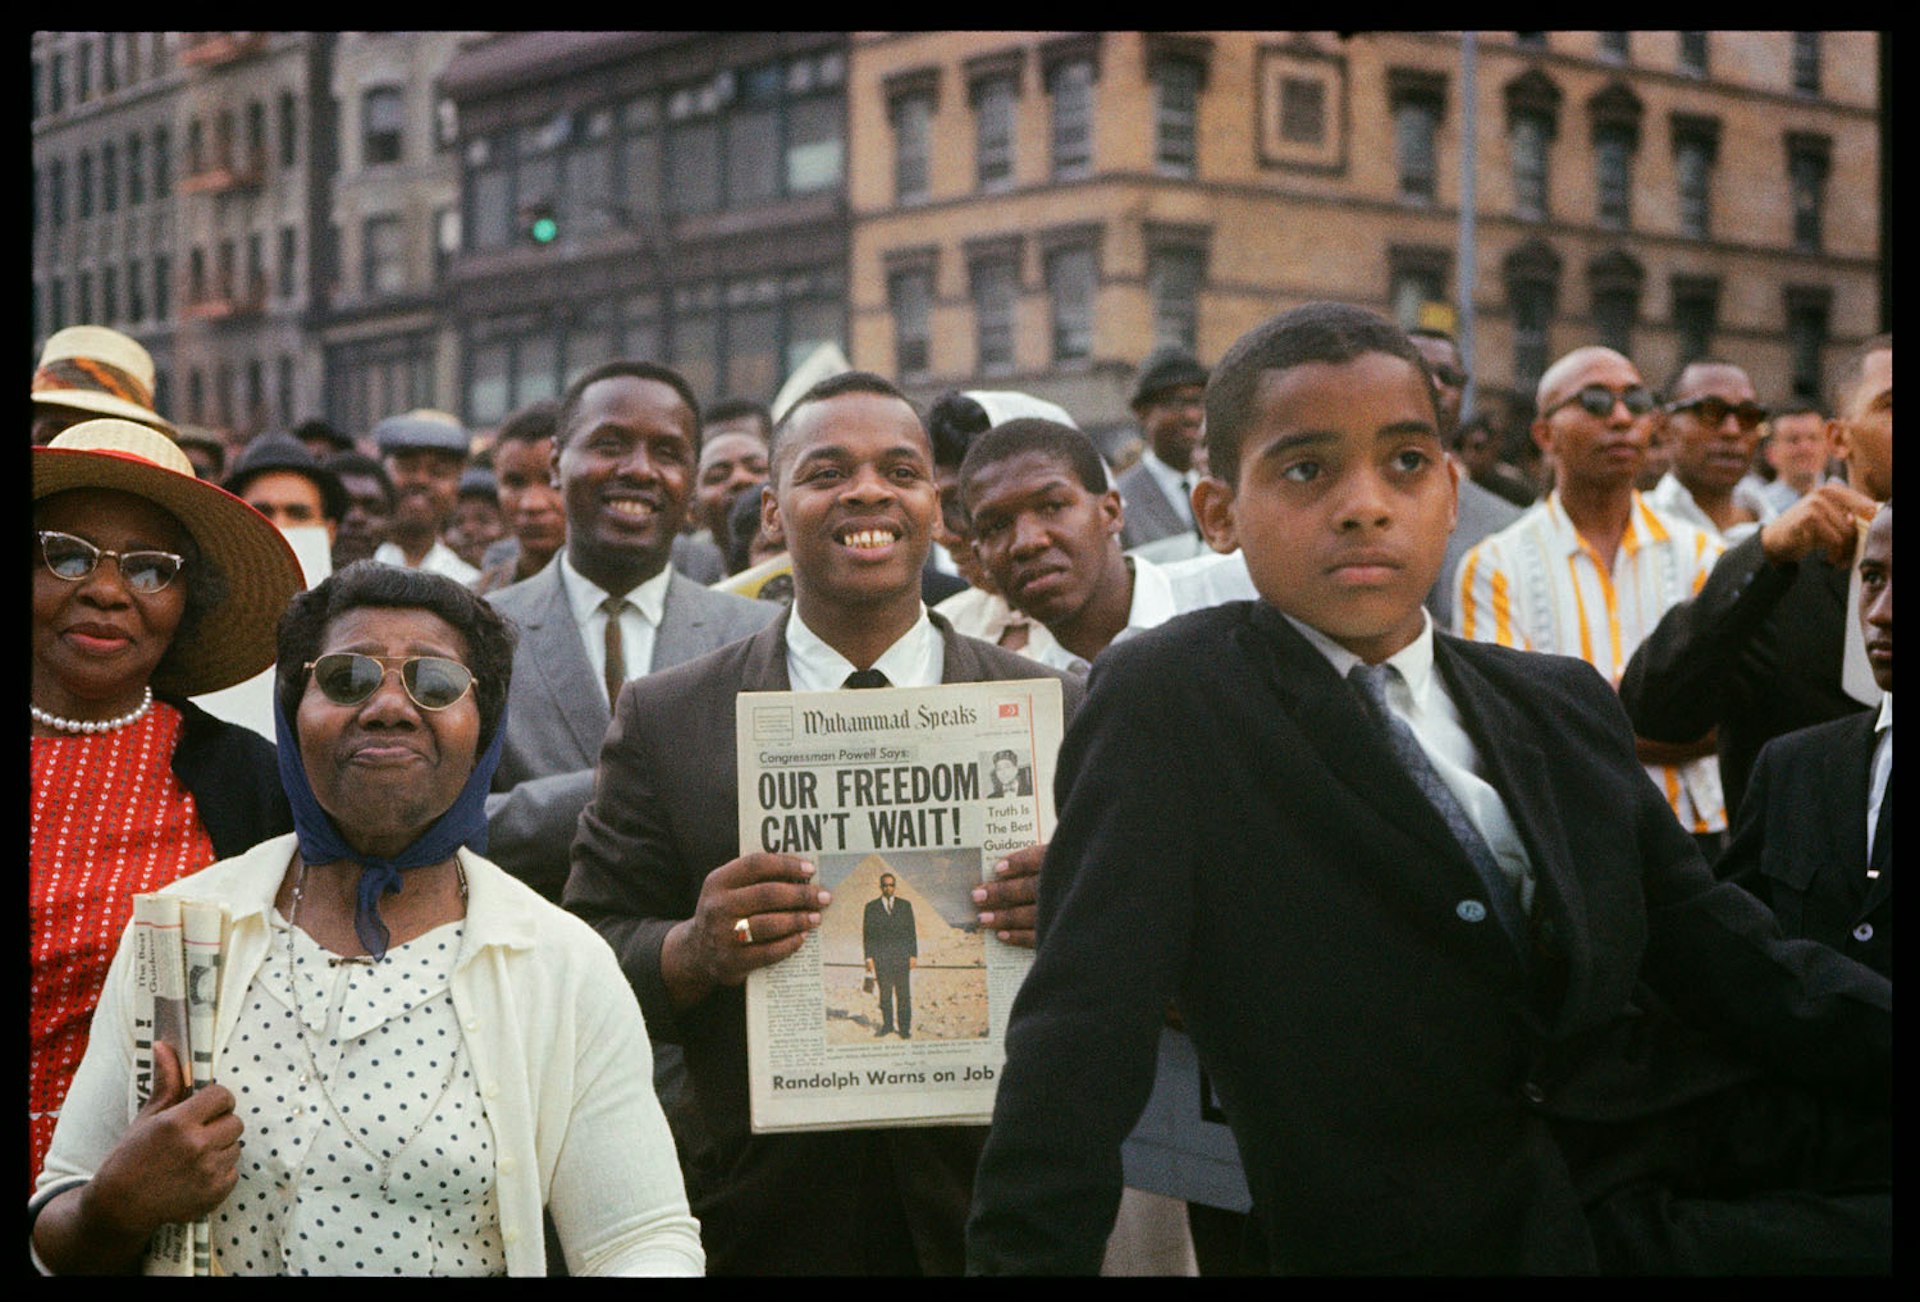 Gordon Parks’ luminous photos of Black American life